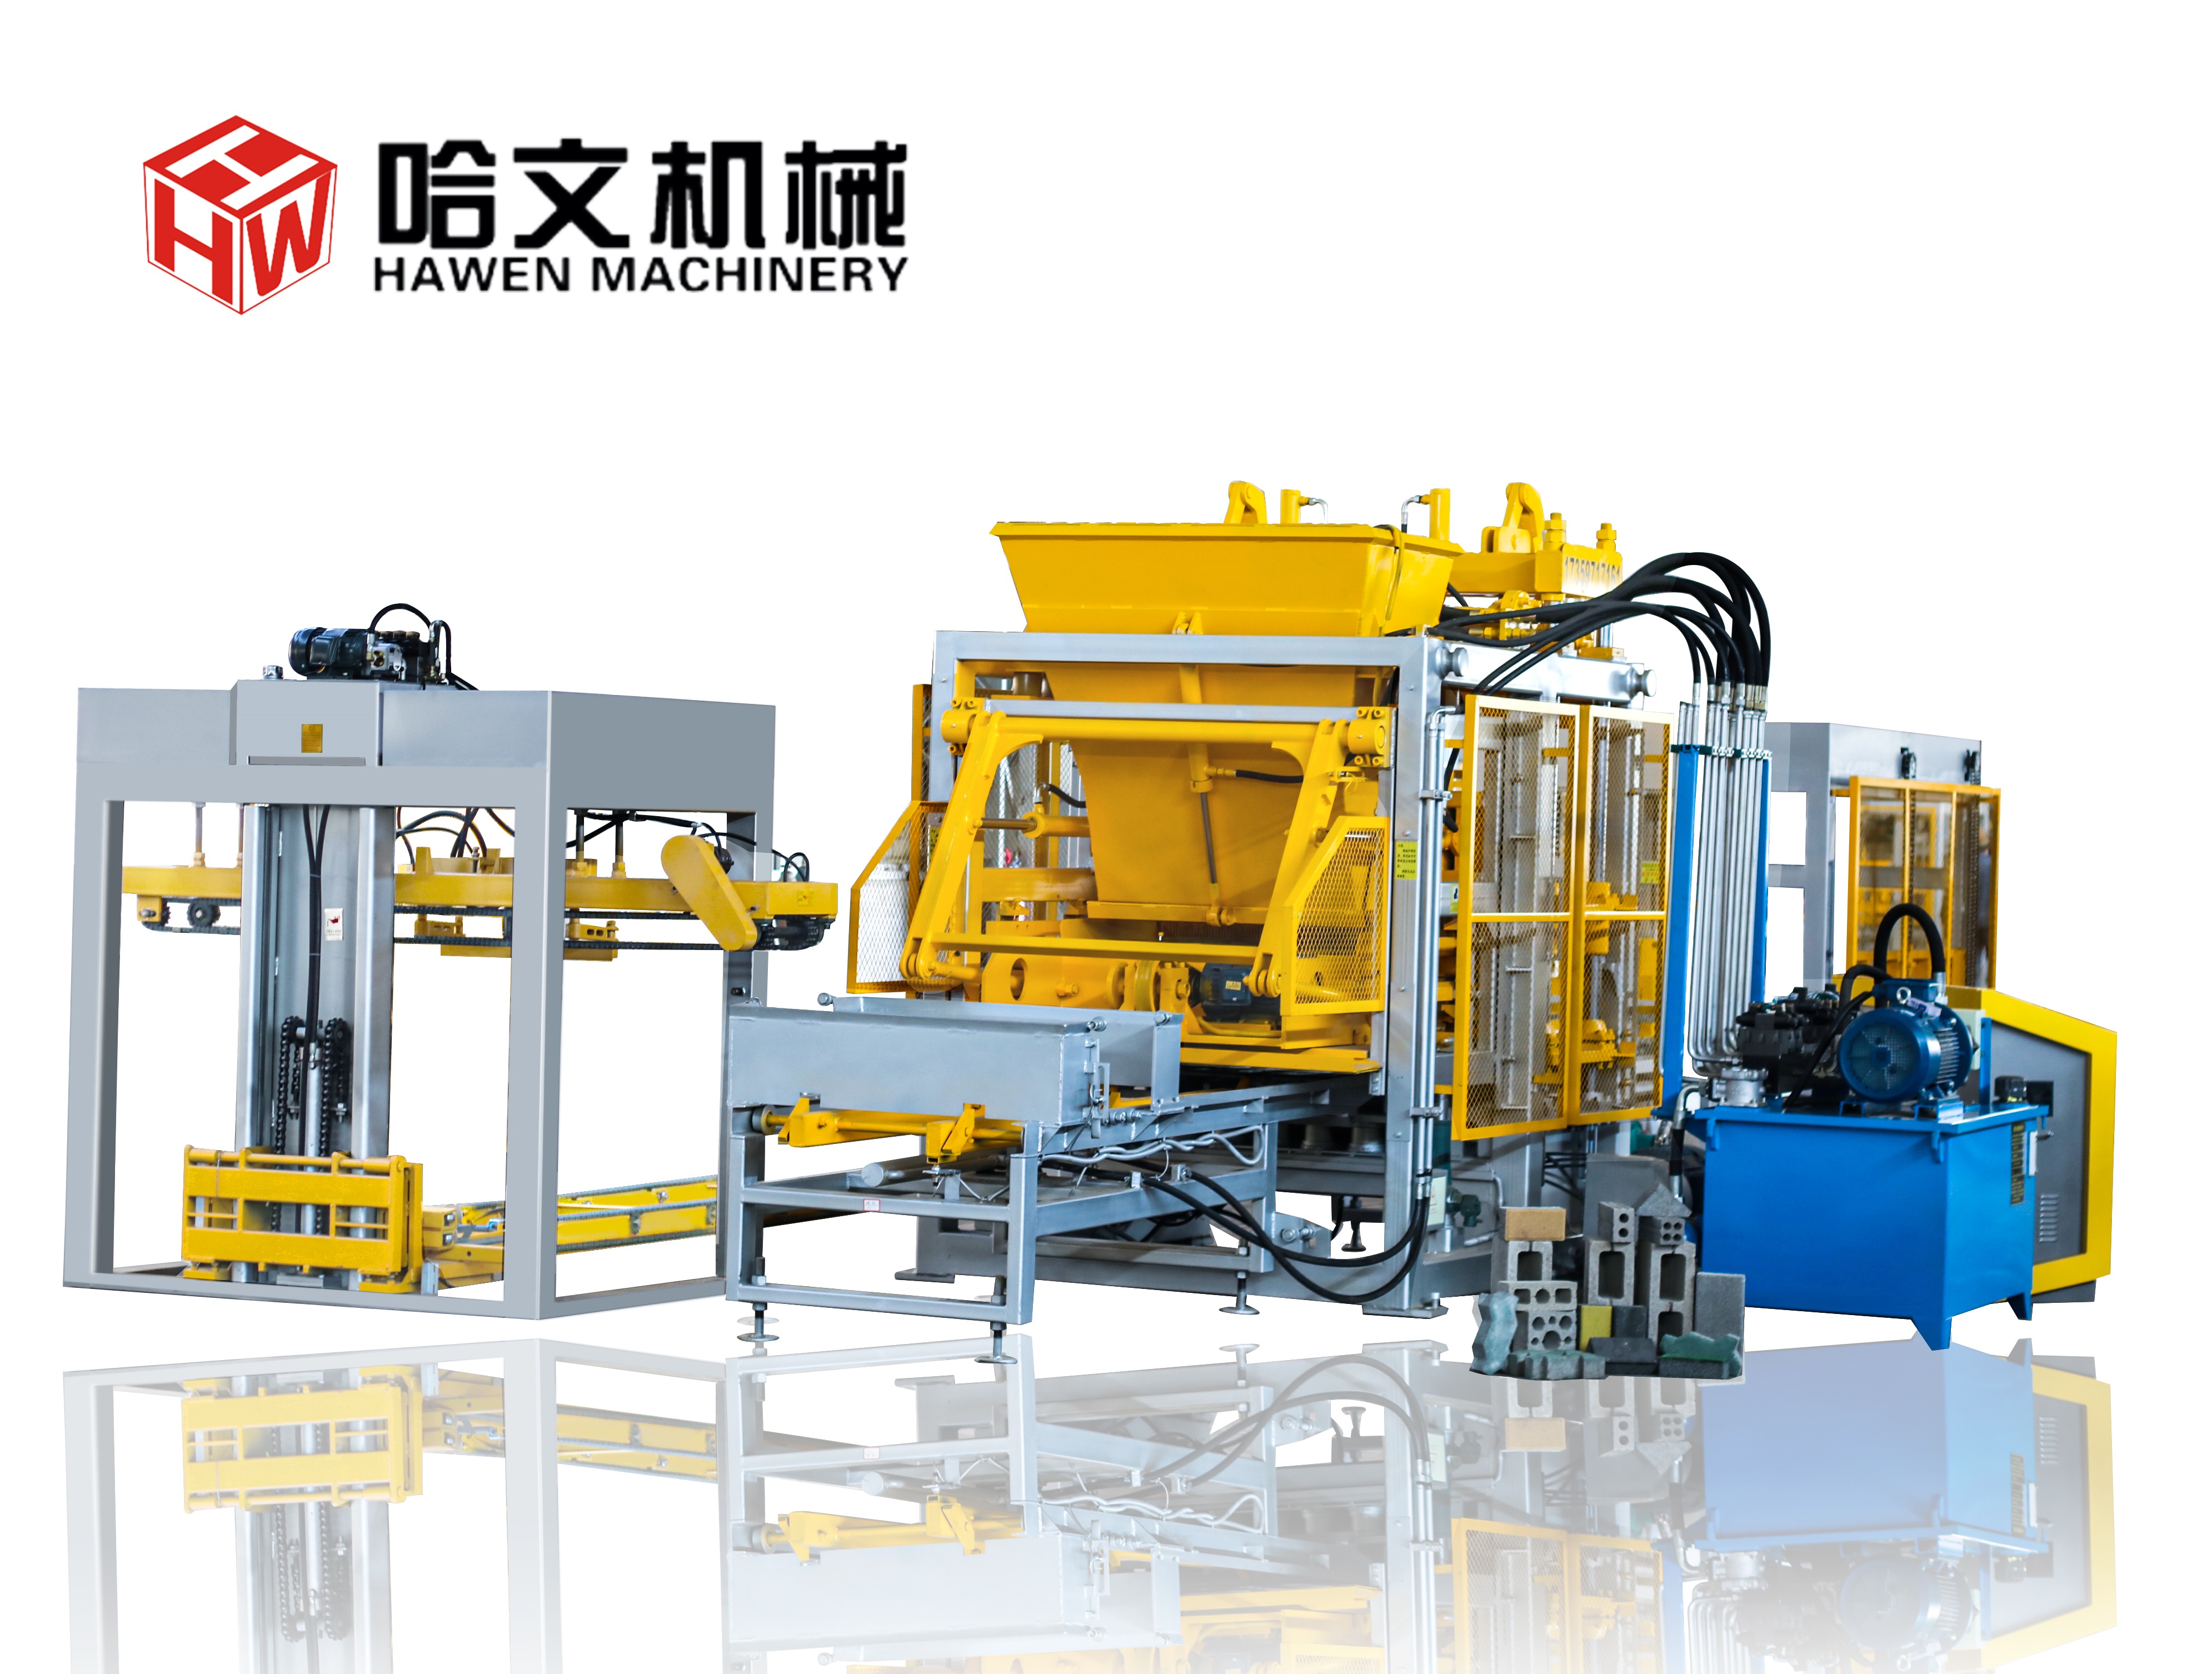 QT12-15 Máquina automática para fabricar bloques de cemento hidráulico a gran escala